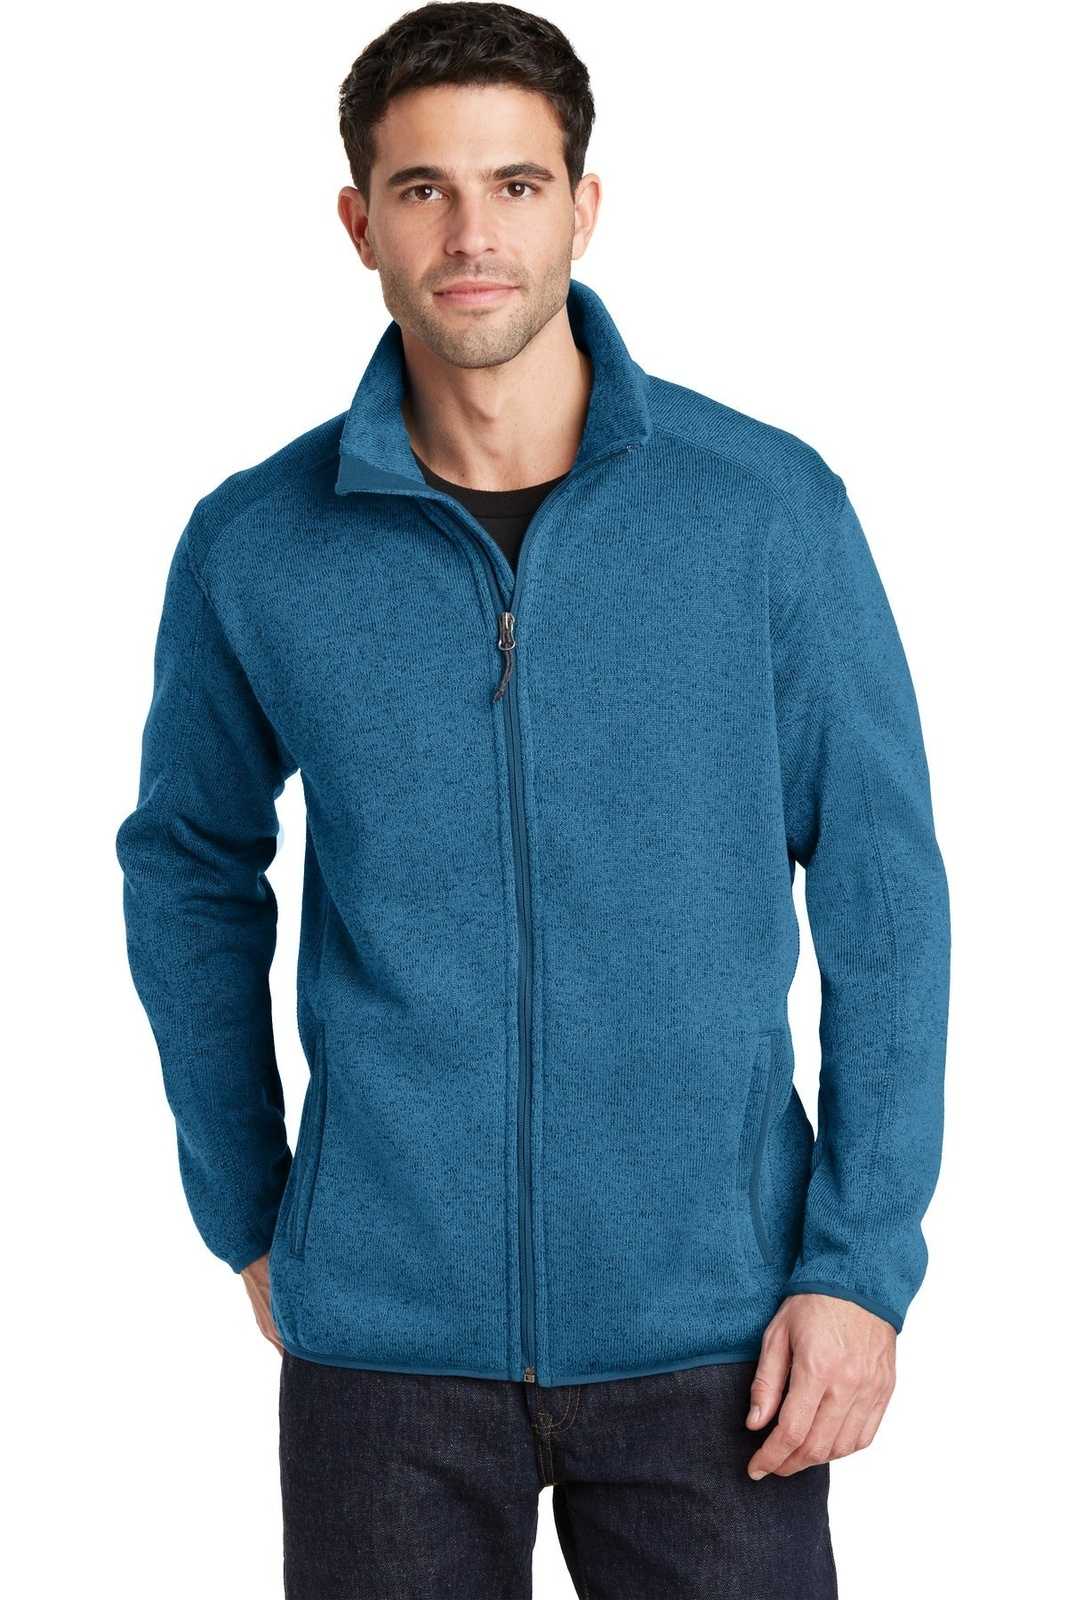 Port Authority F232 Sweater Fleece Jacket - Medium Blue Heather - HIT a Double - 1